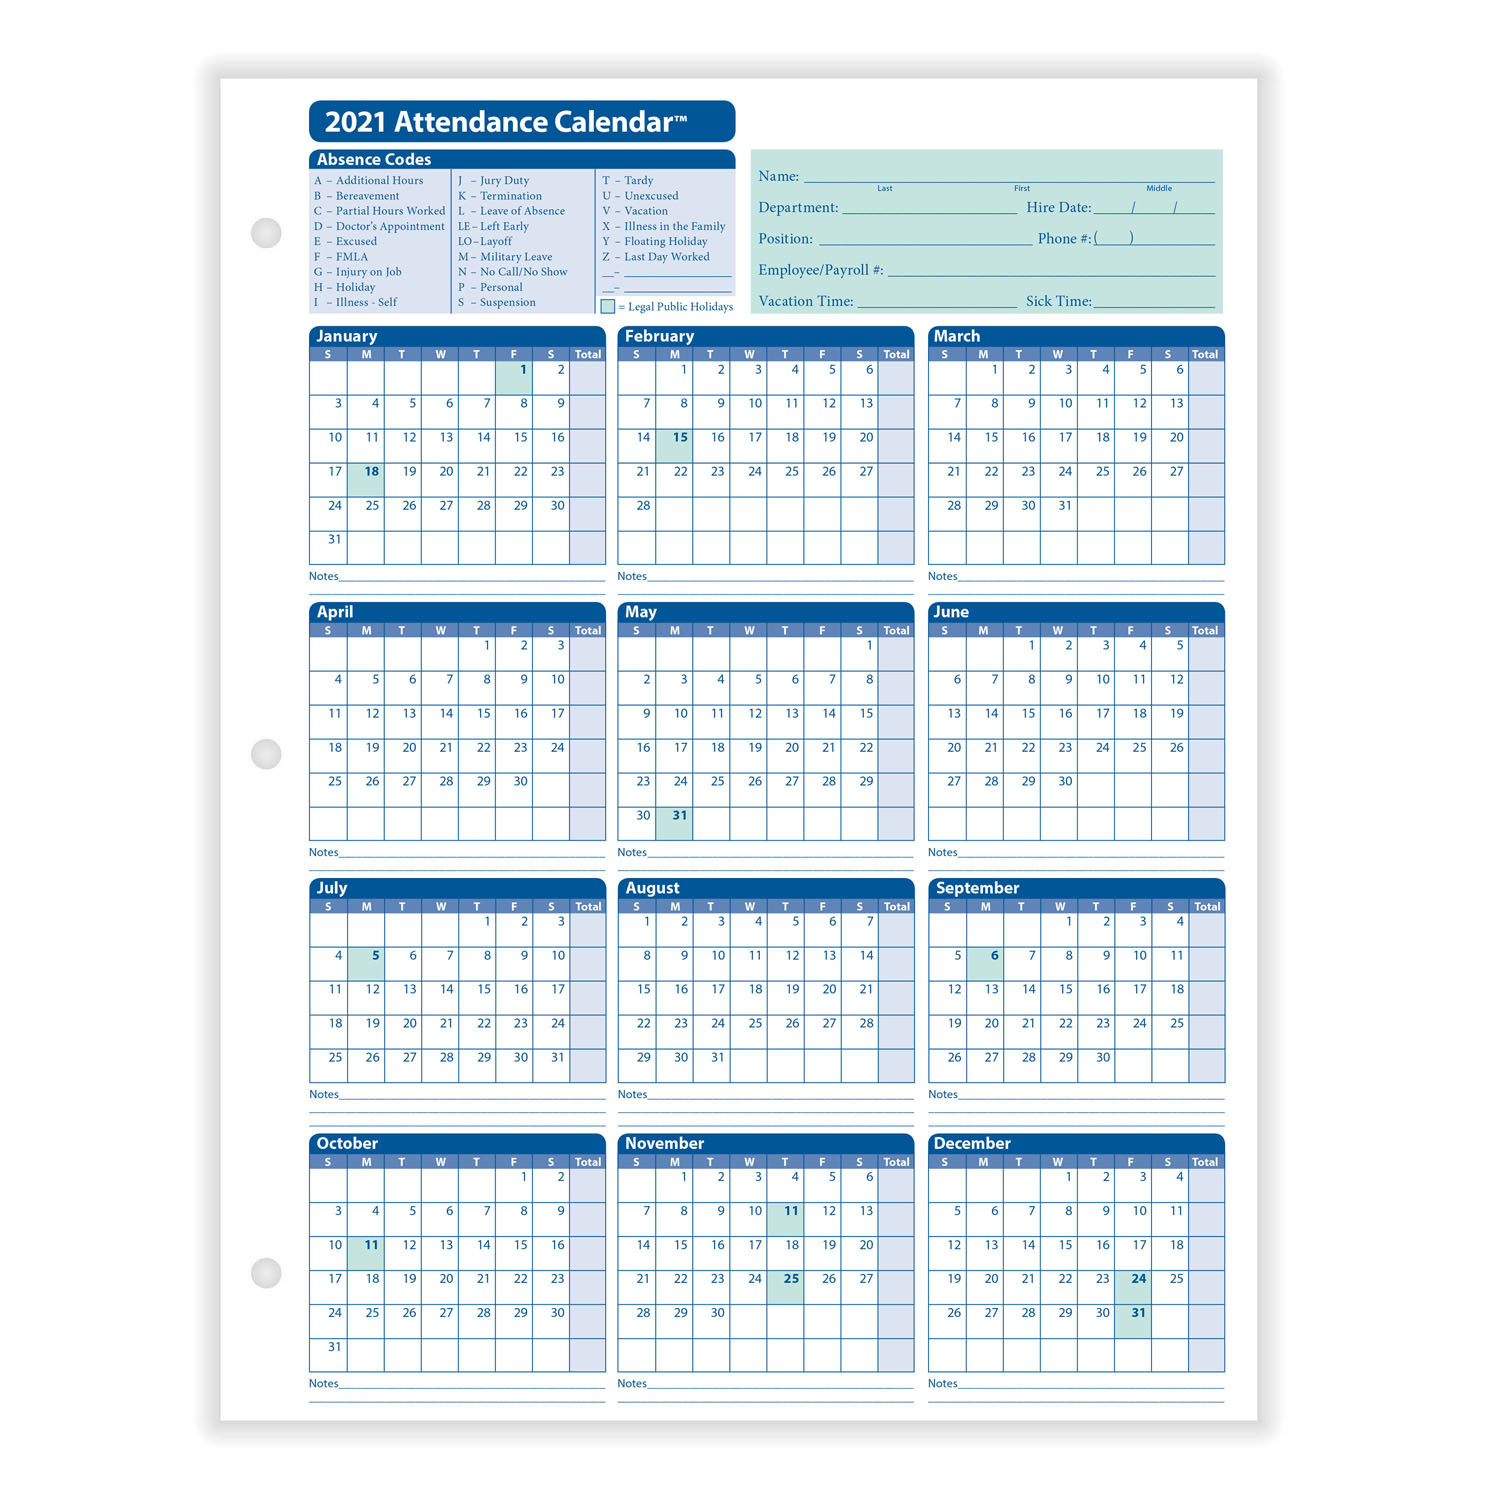 Free Printable 2021 Employee Attendance Calendar Ppe-2021 Employee Attendance Calendar Template